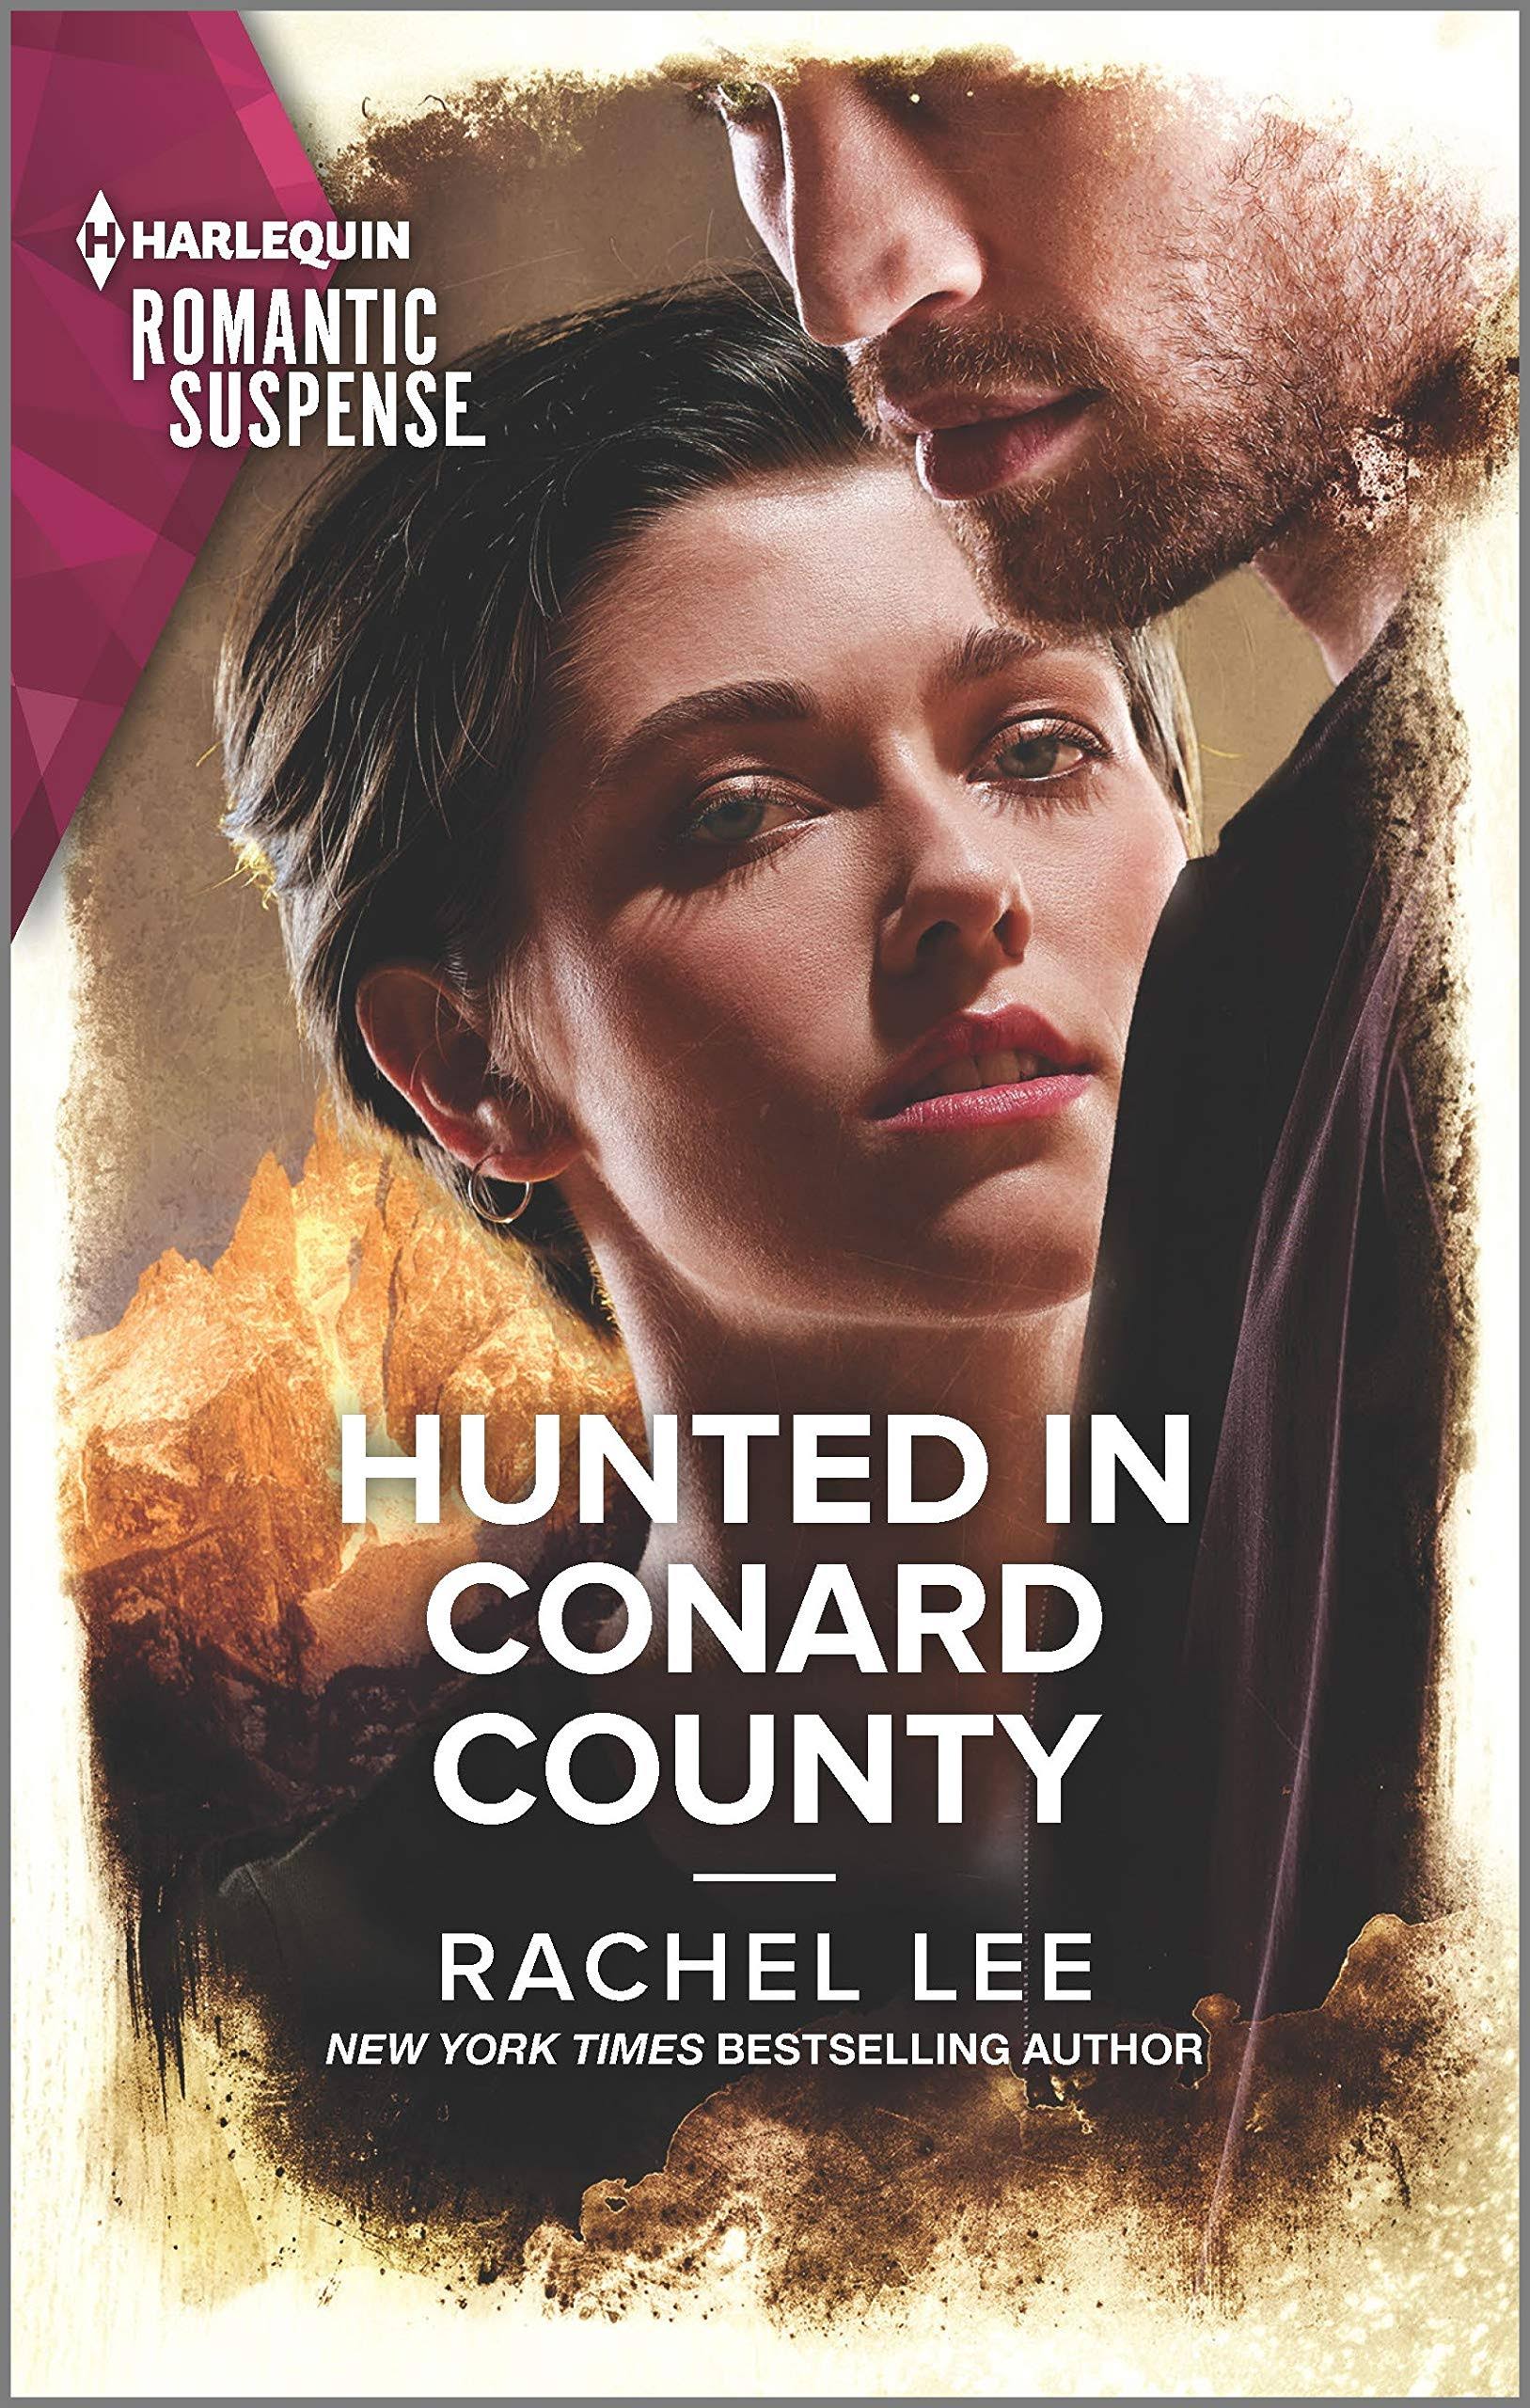 Hunted in Conard County [Book]